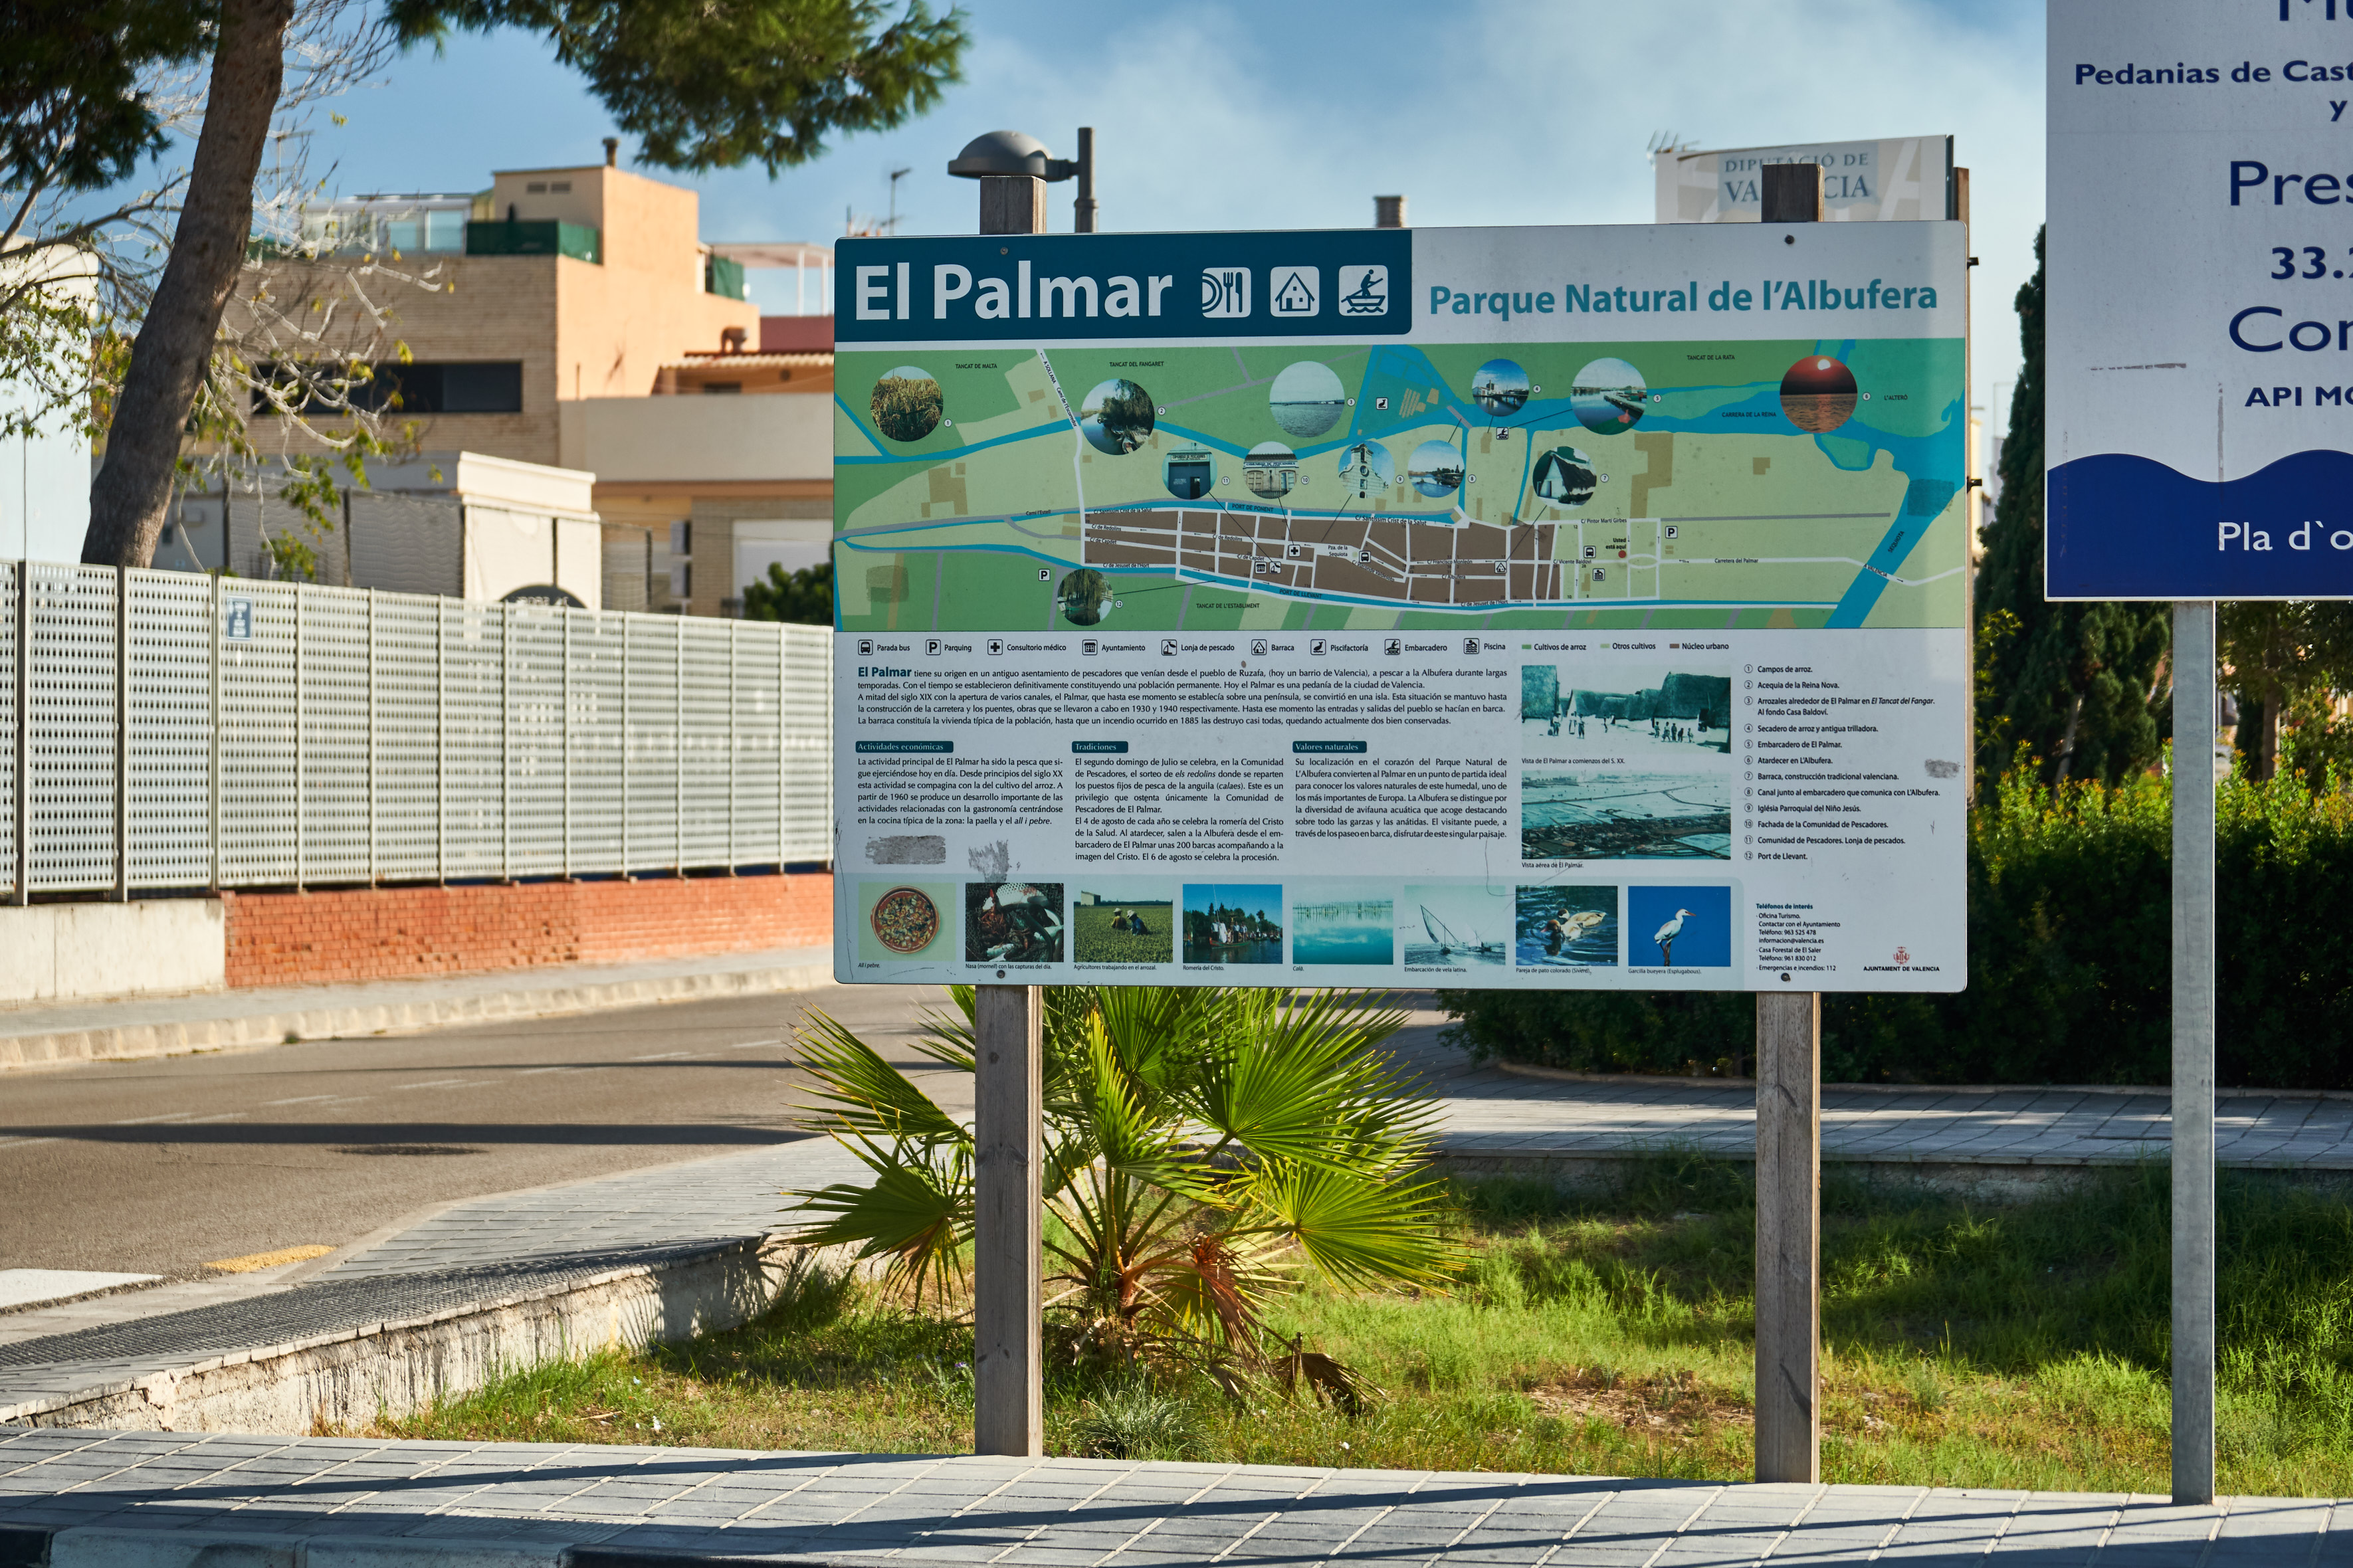 Map of El Palmar